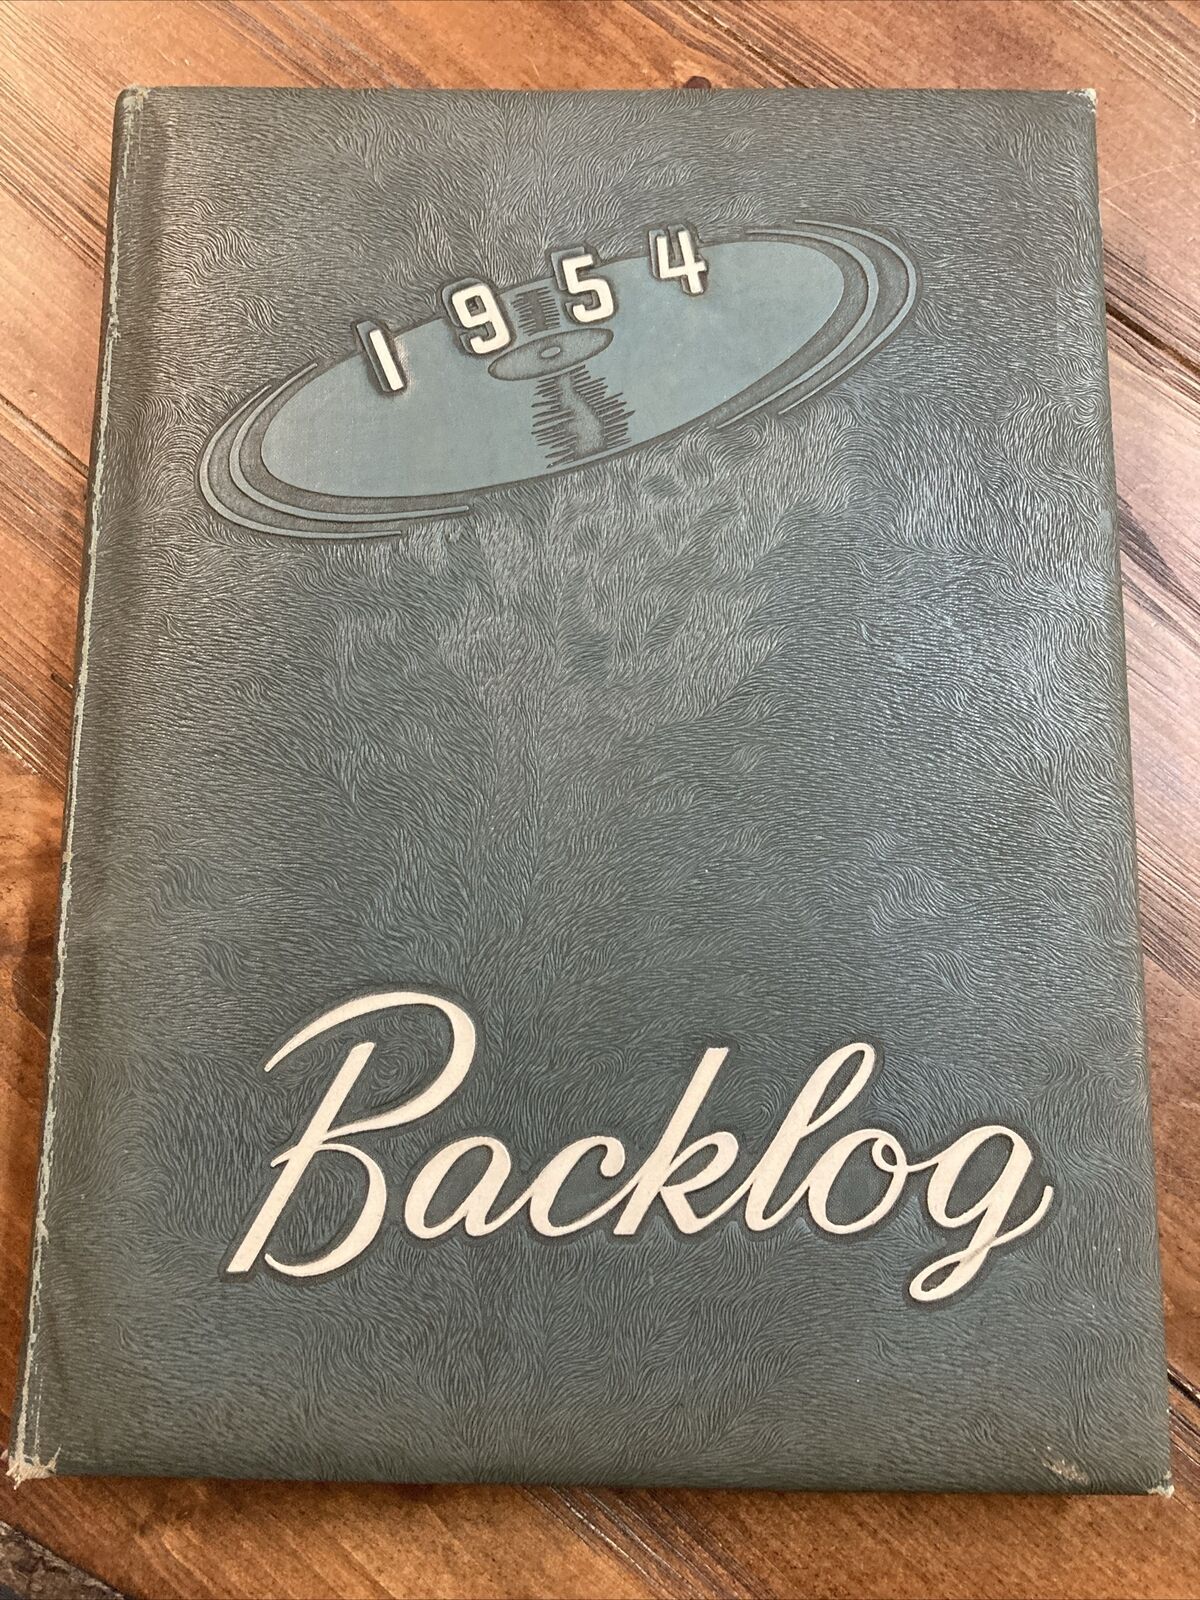 1954 David Lipscomb Backlog TN Nashville Tennessee College Yearbook